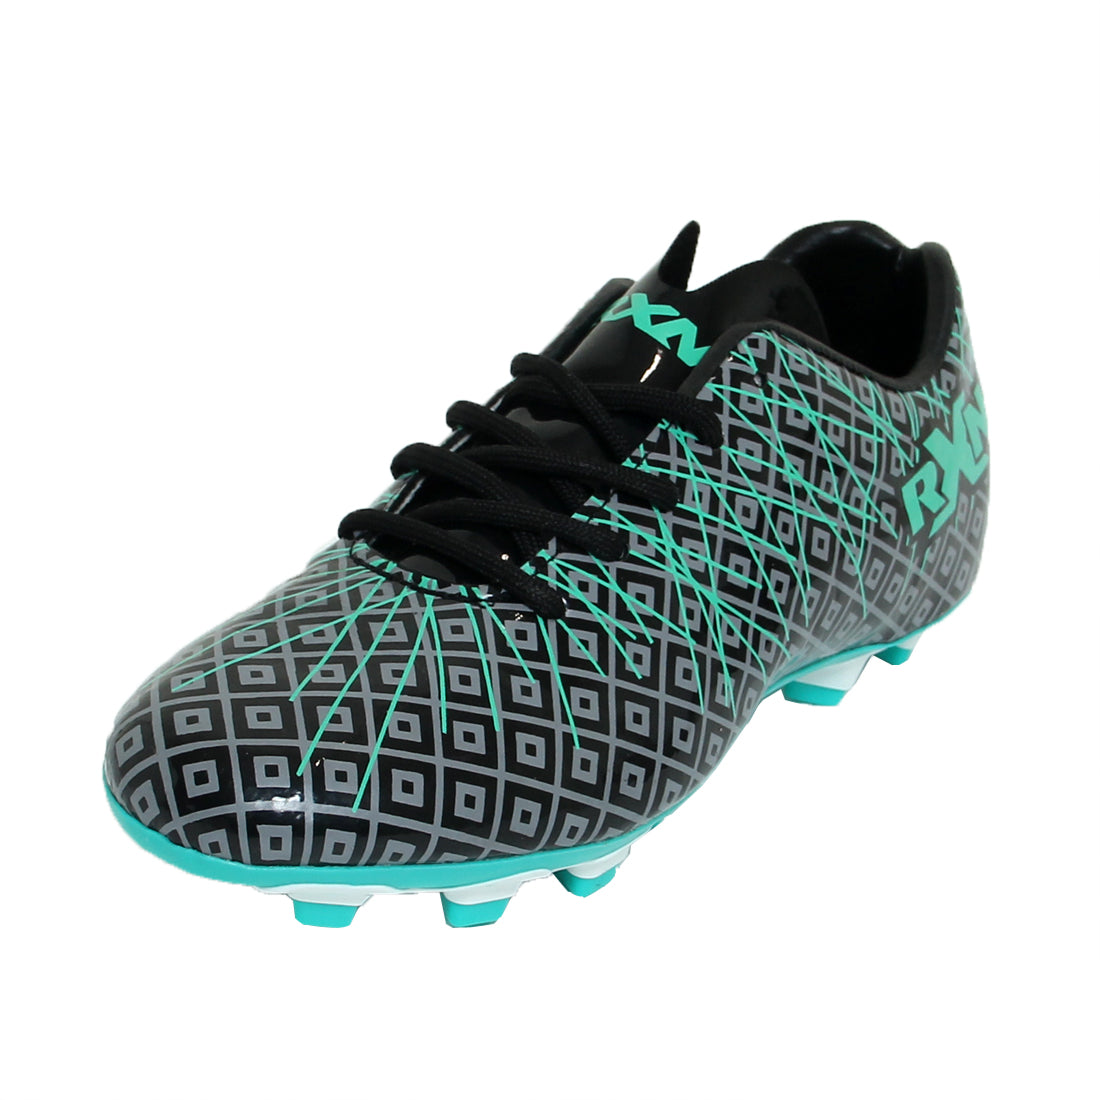 Men's Football Boots & Shoes. Nike LU